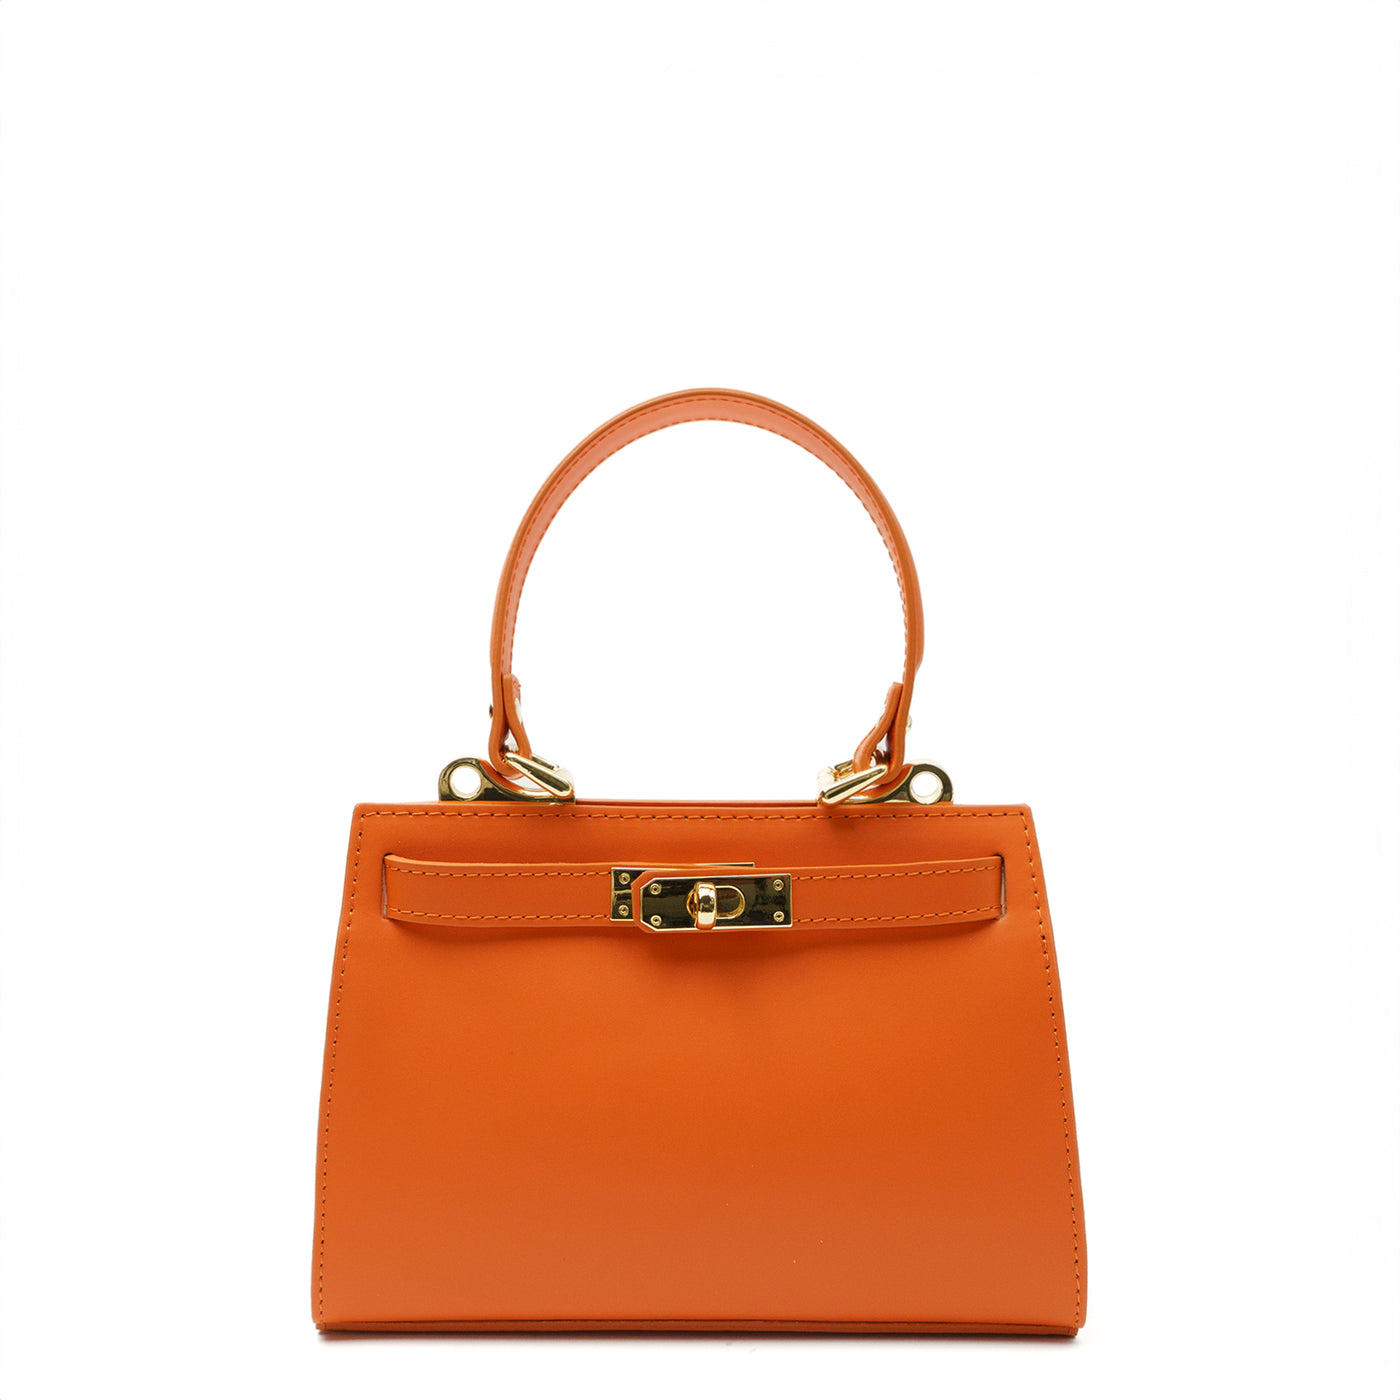 Leather bag "Latina", Orange